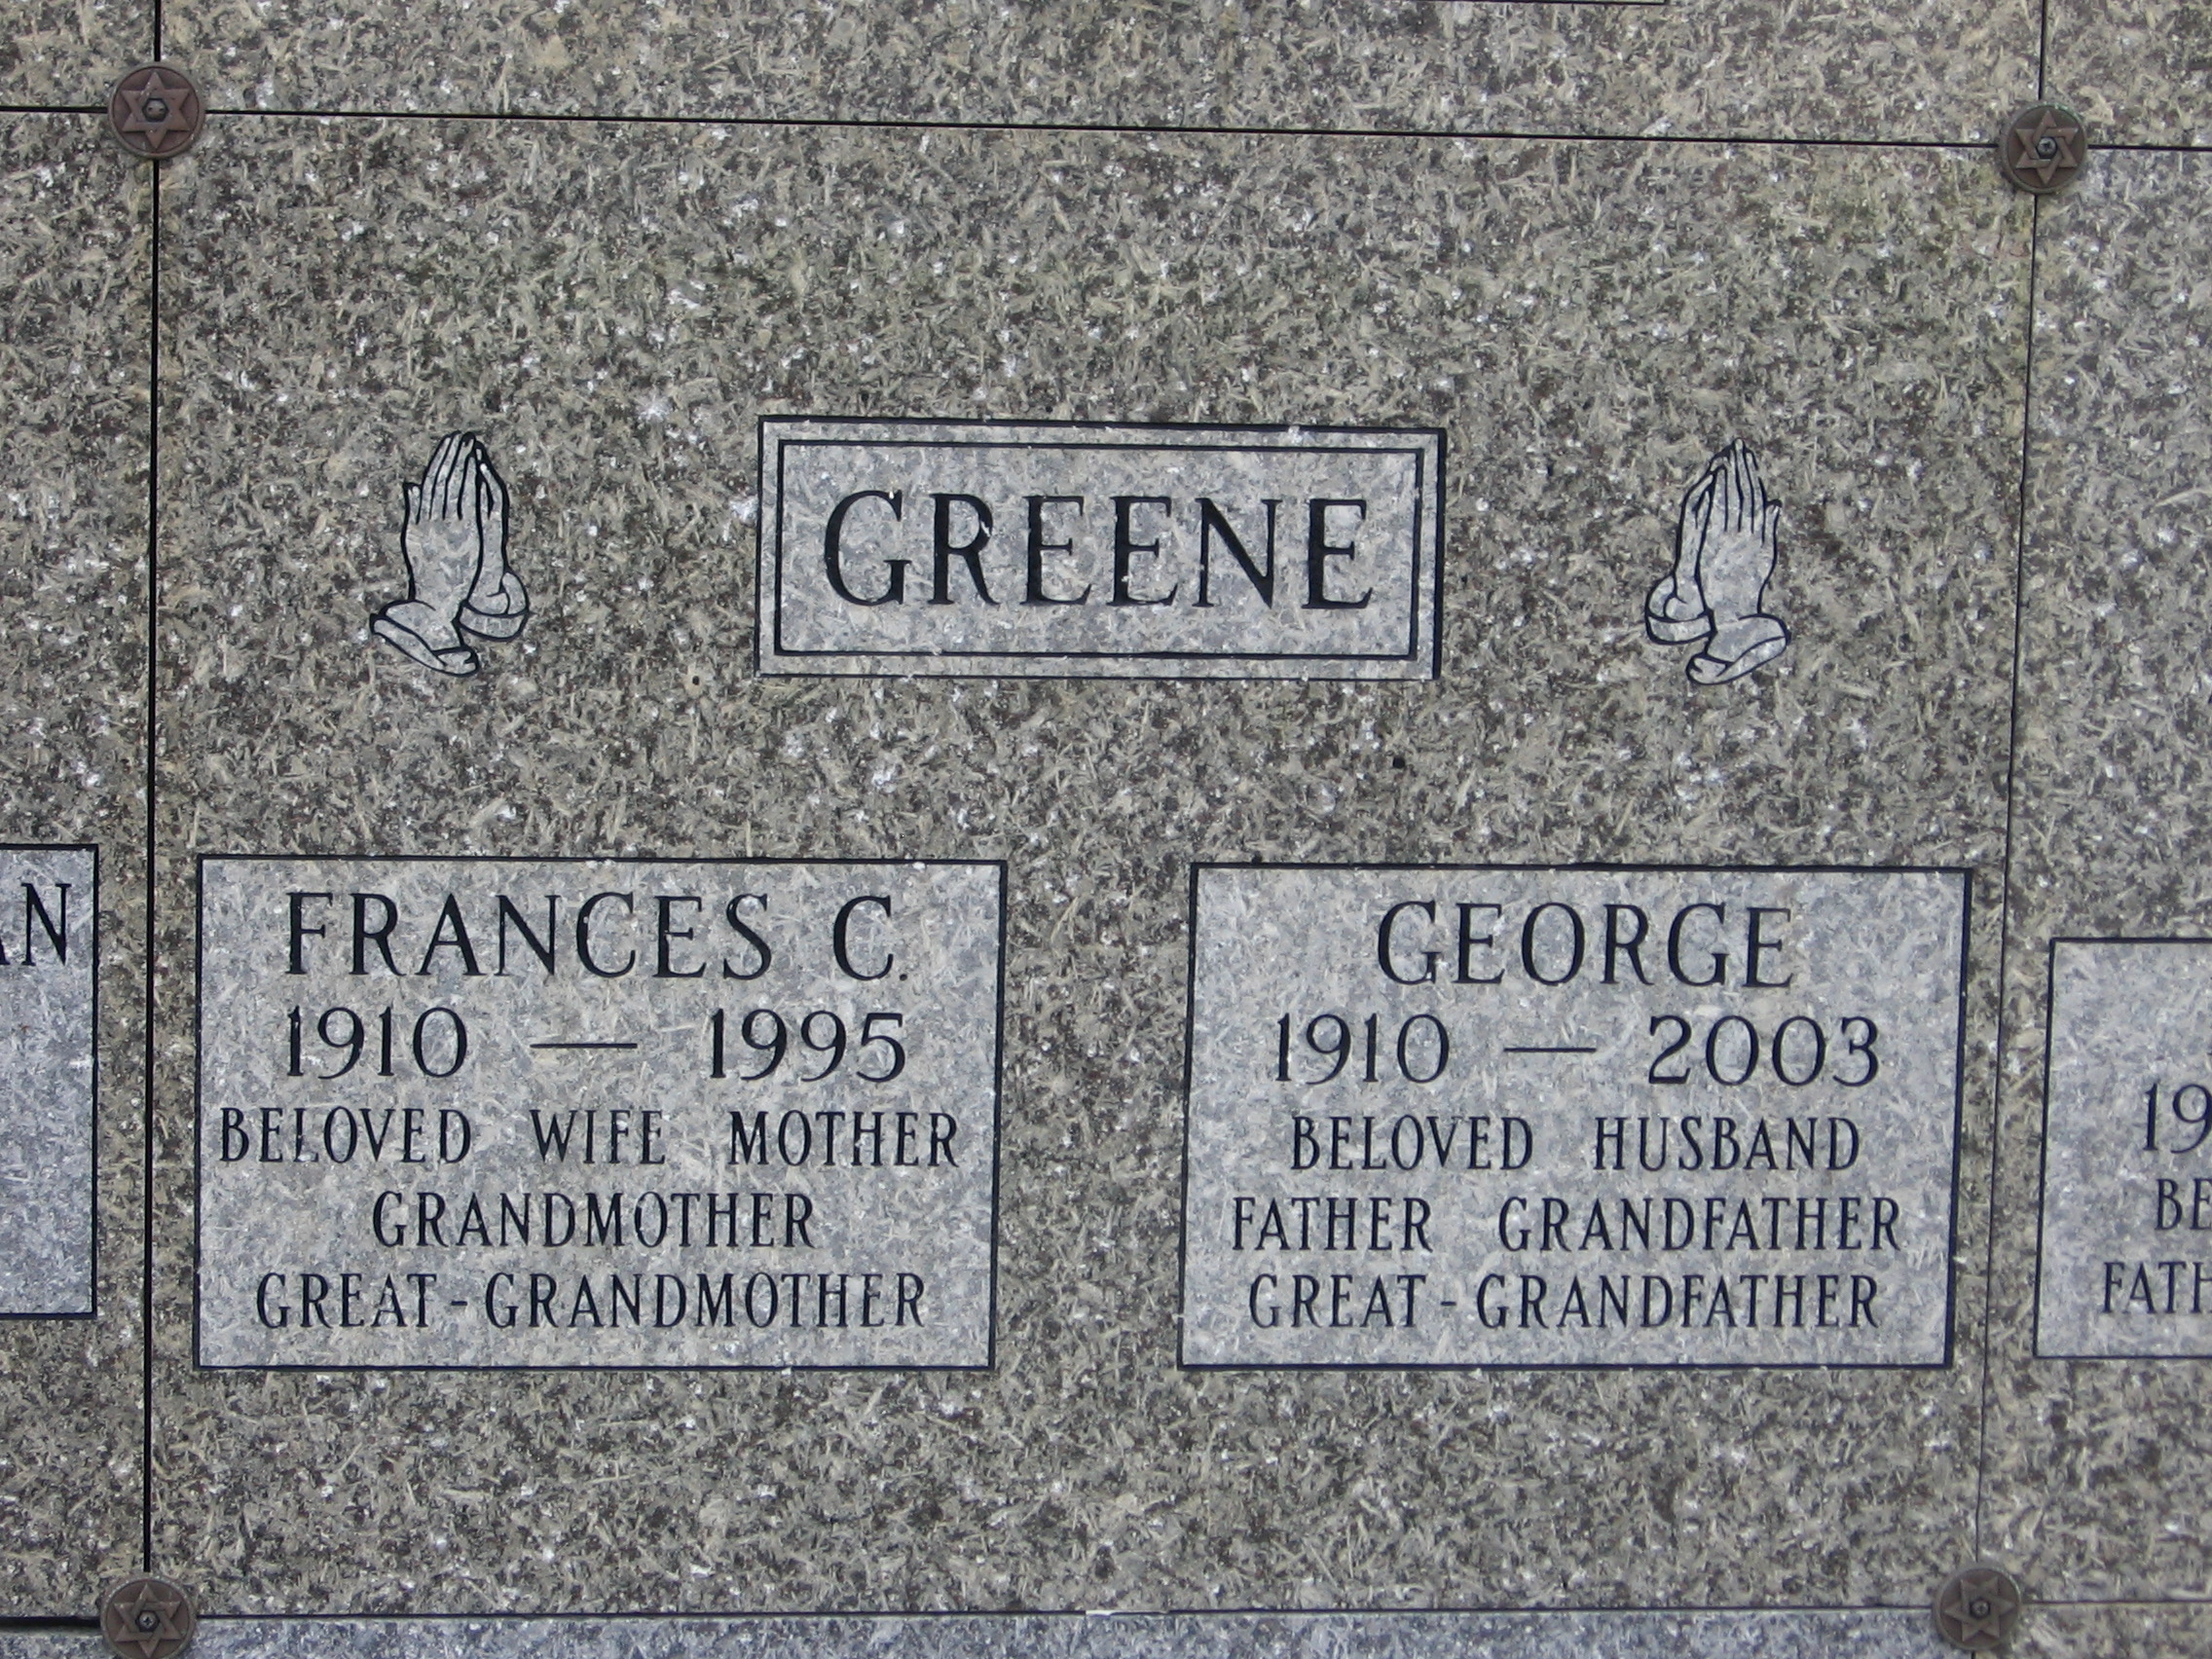 Frances C Greene